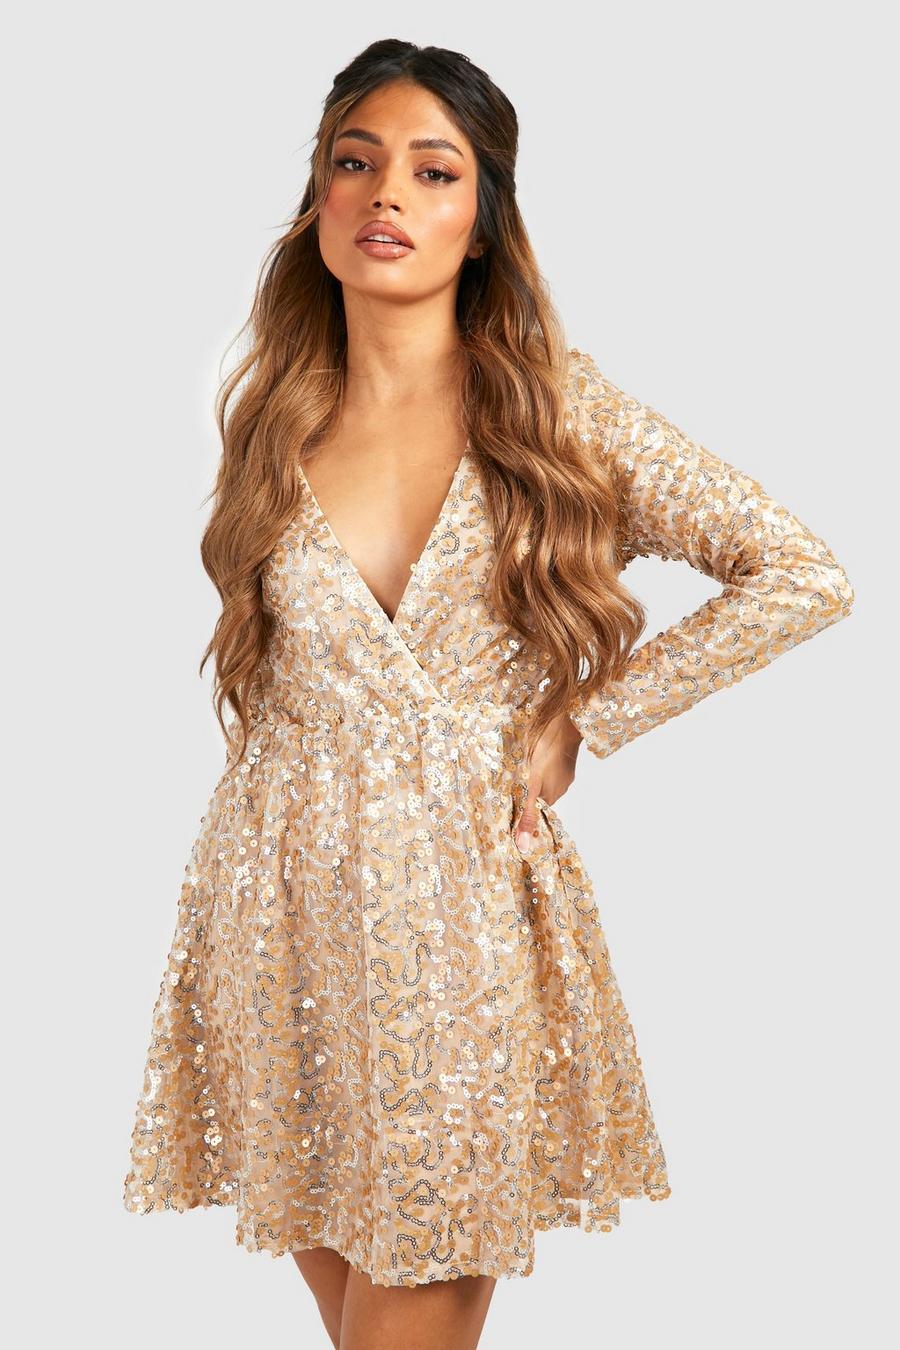 Gold metallic Boutique Sequin Wrap Skater Party Dress